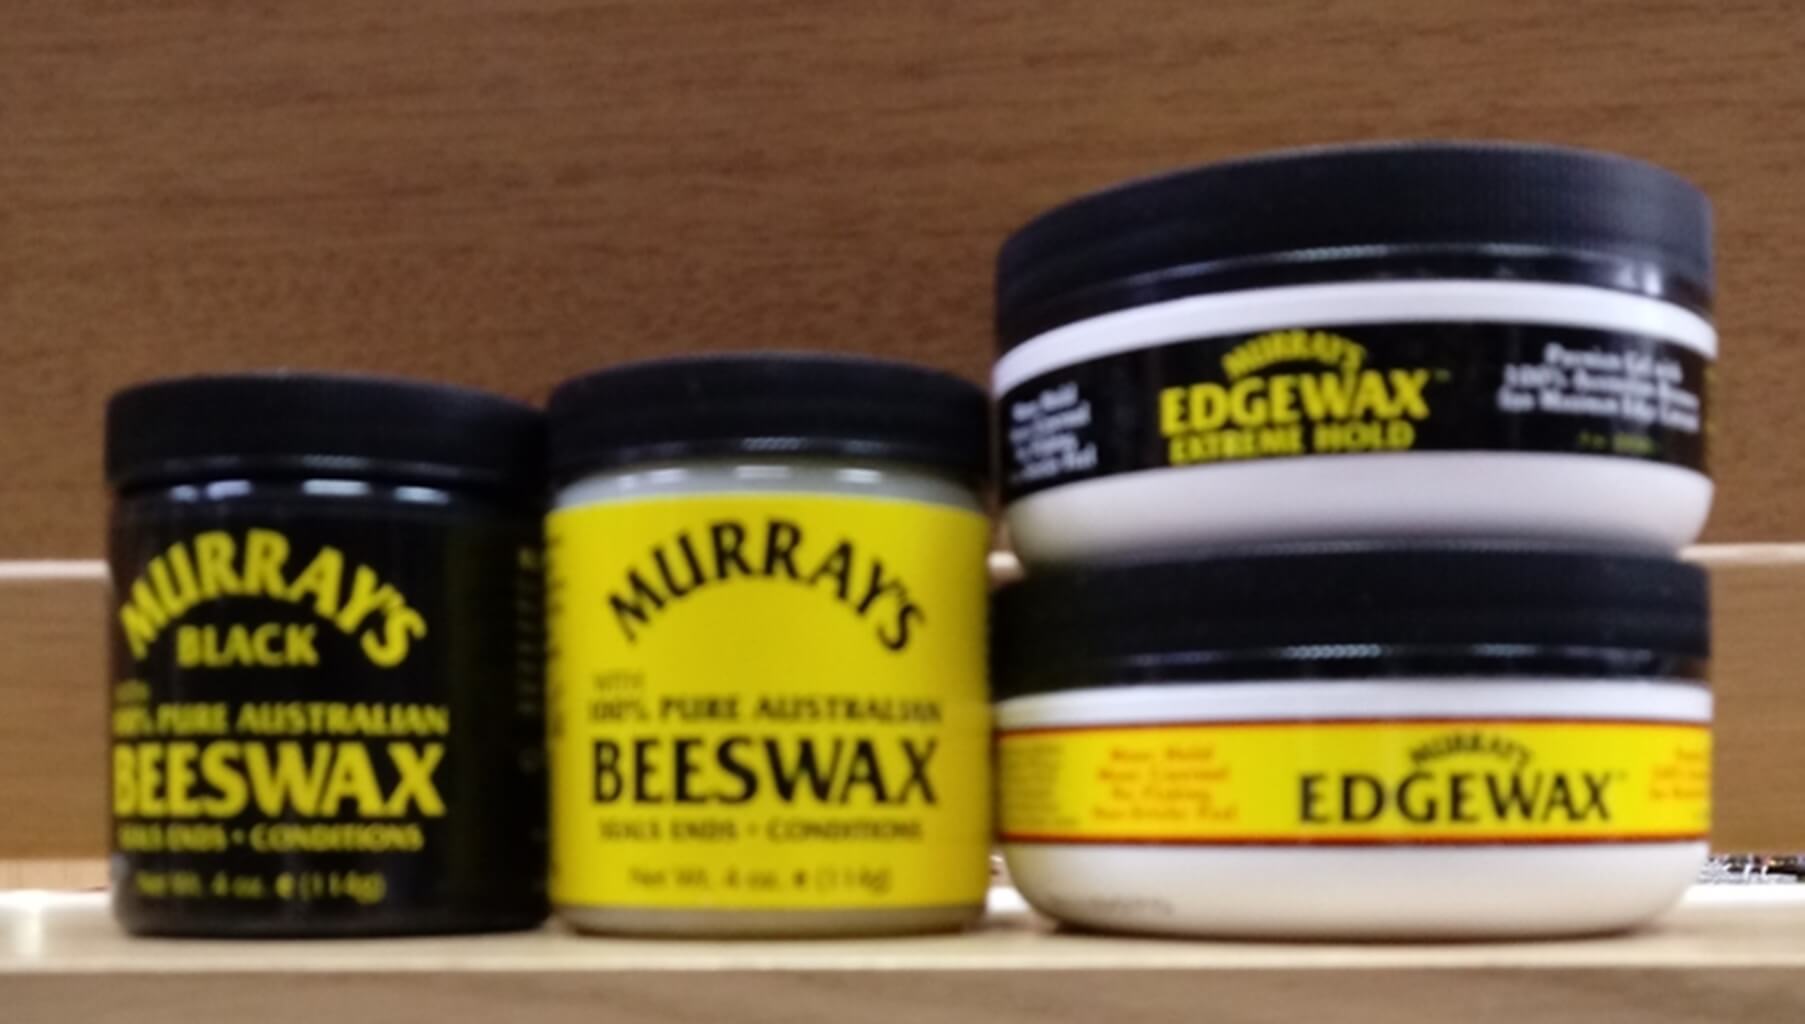 Murray's 100% Pure Australian Beeswax Hair Products